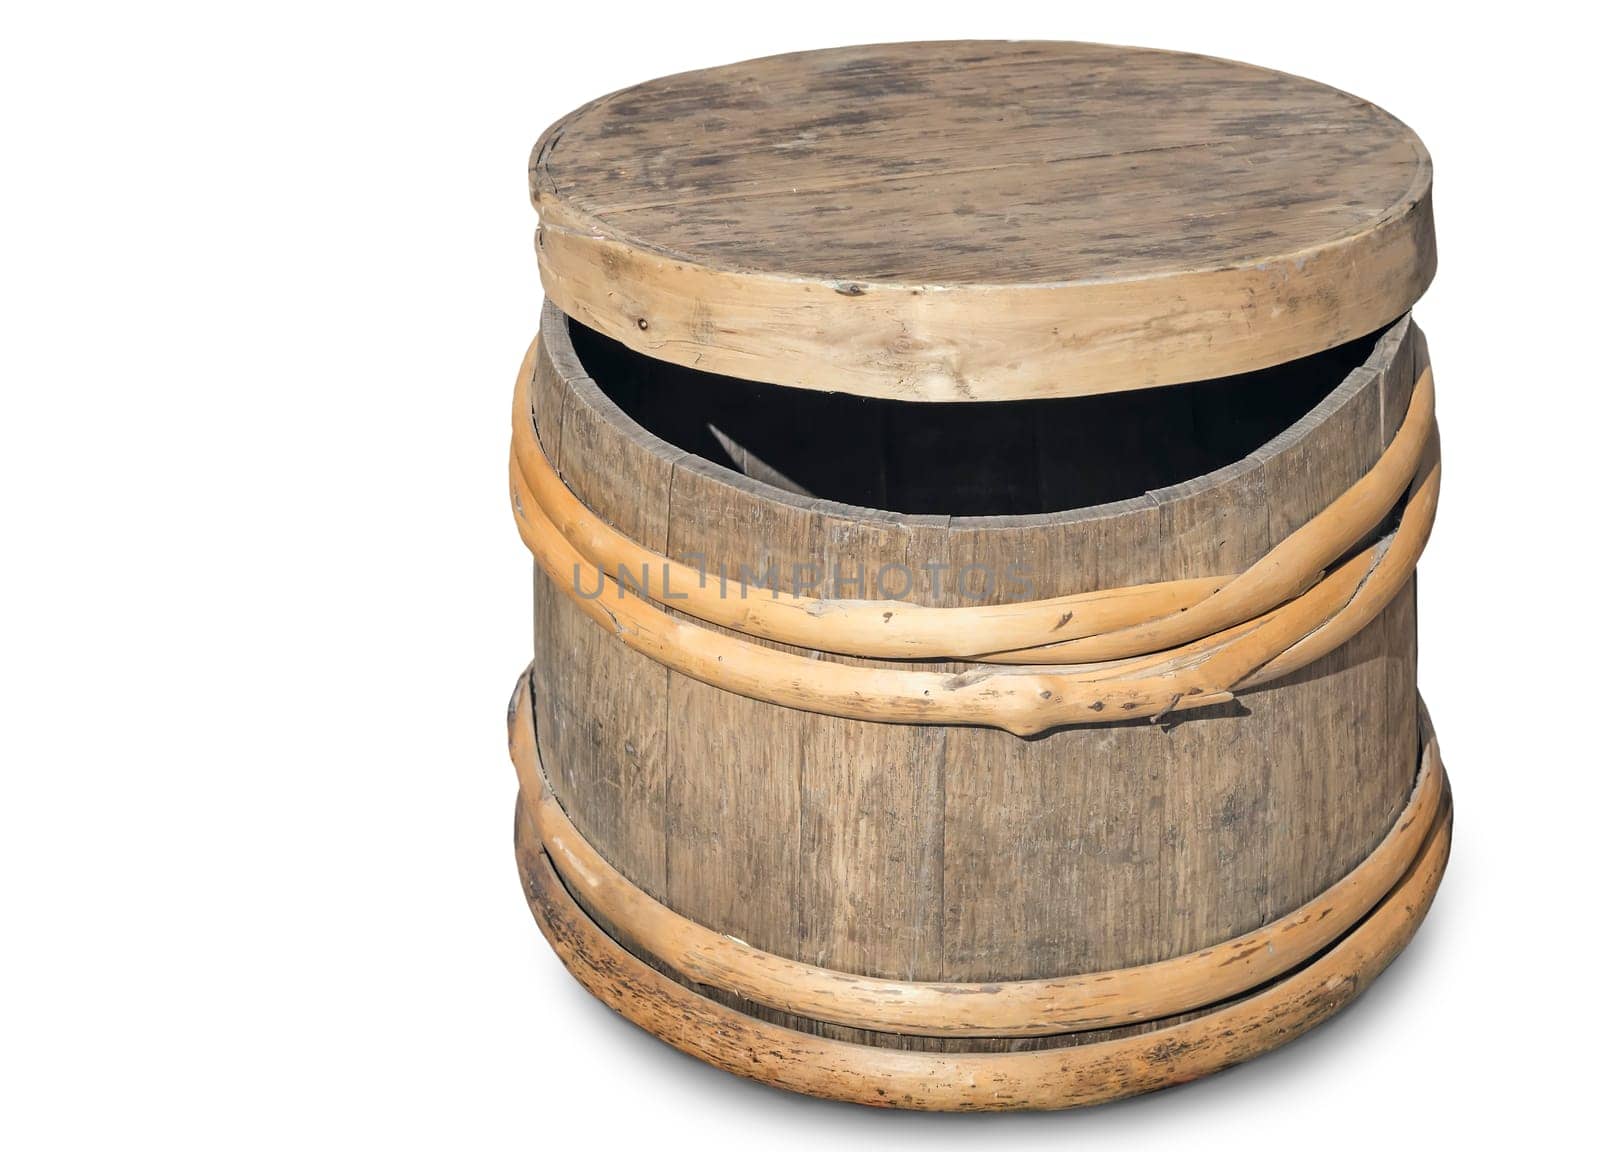 Oak barrel on a white background. by georgina198